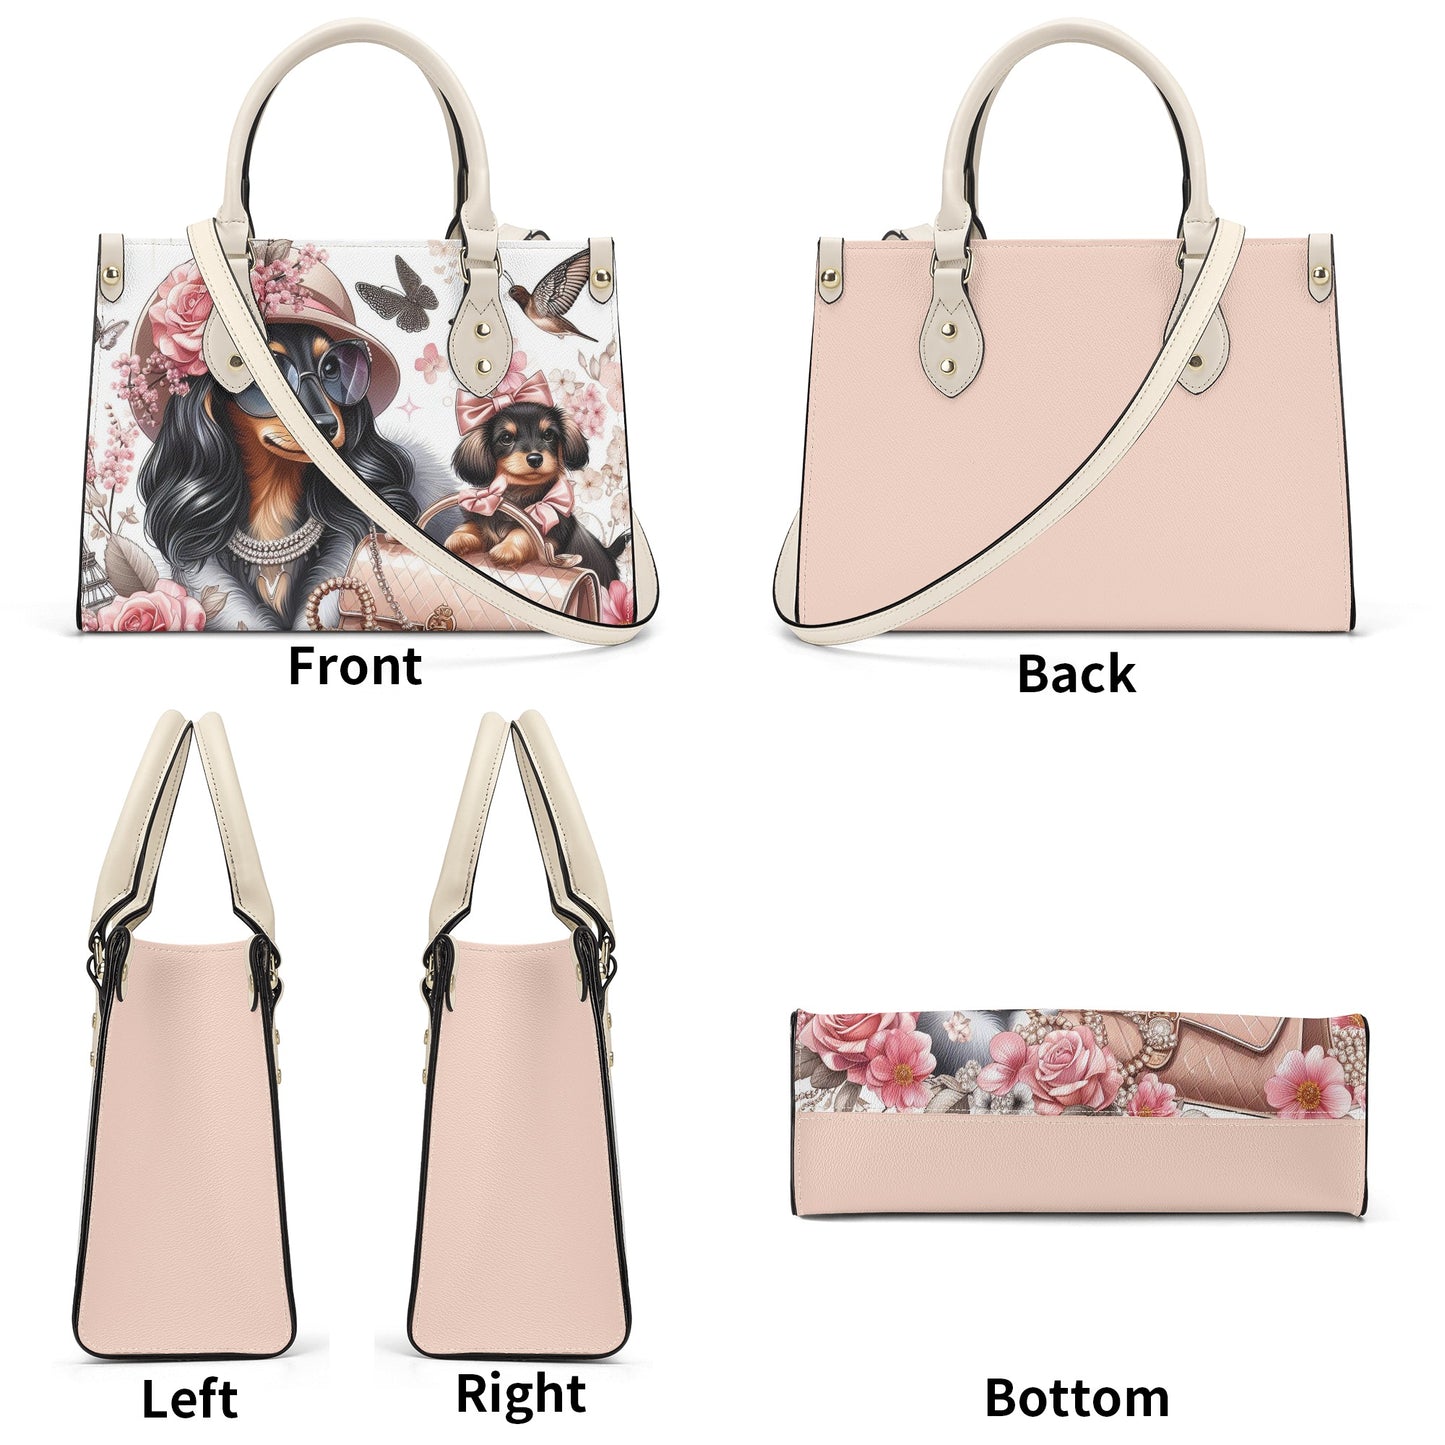 Rudy - Luxury Women Handbag